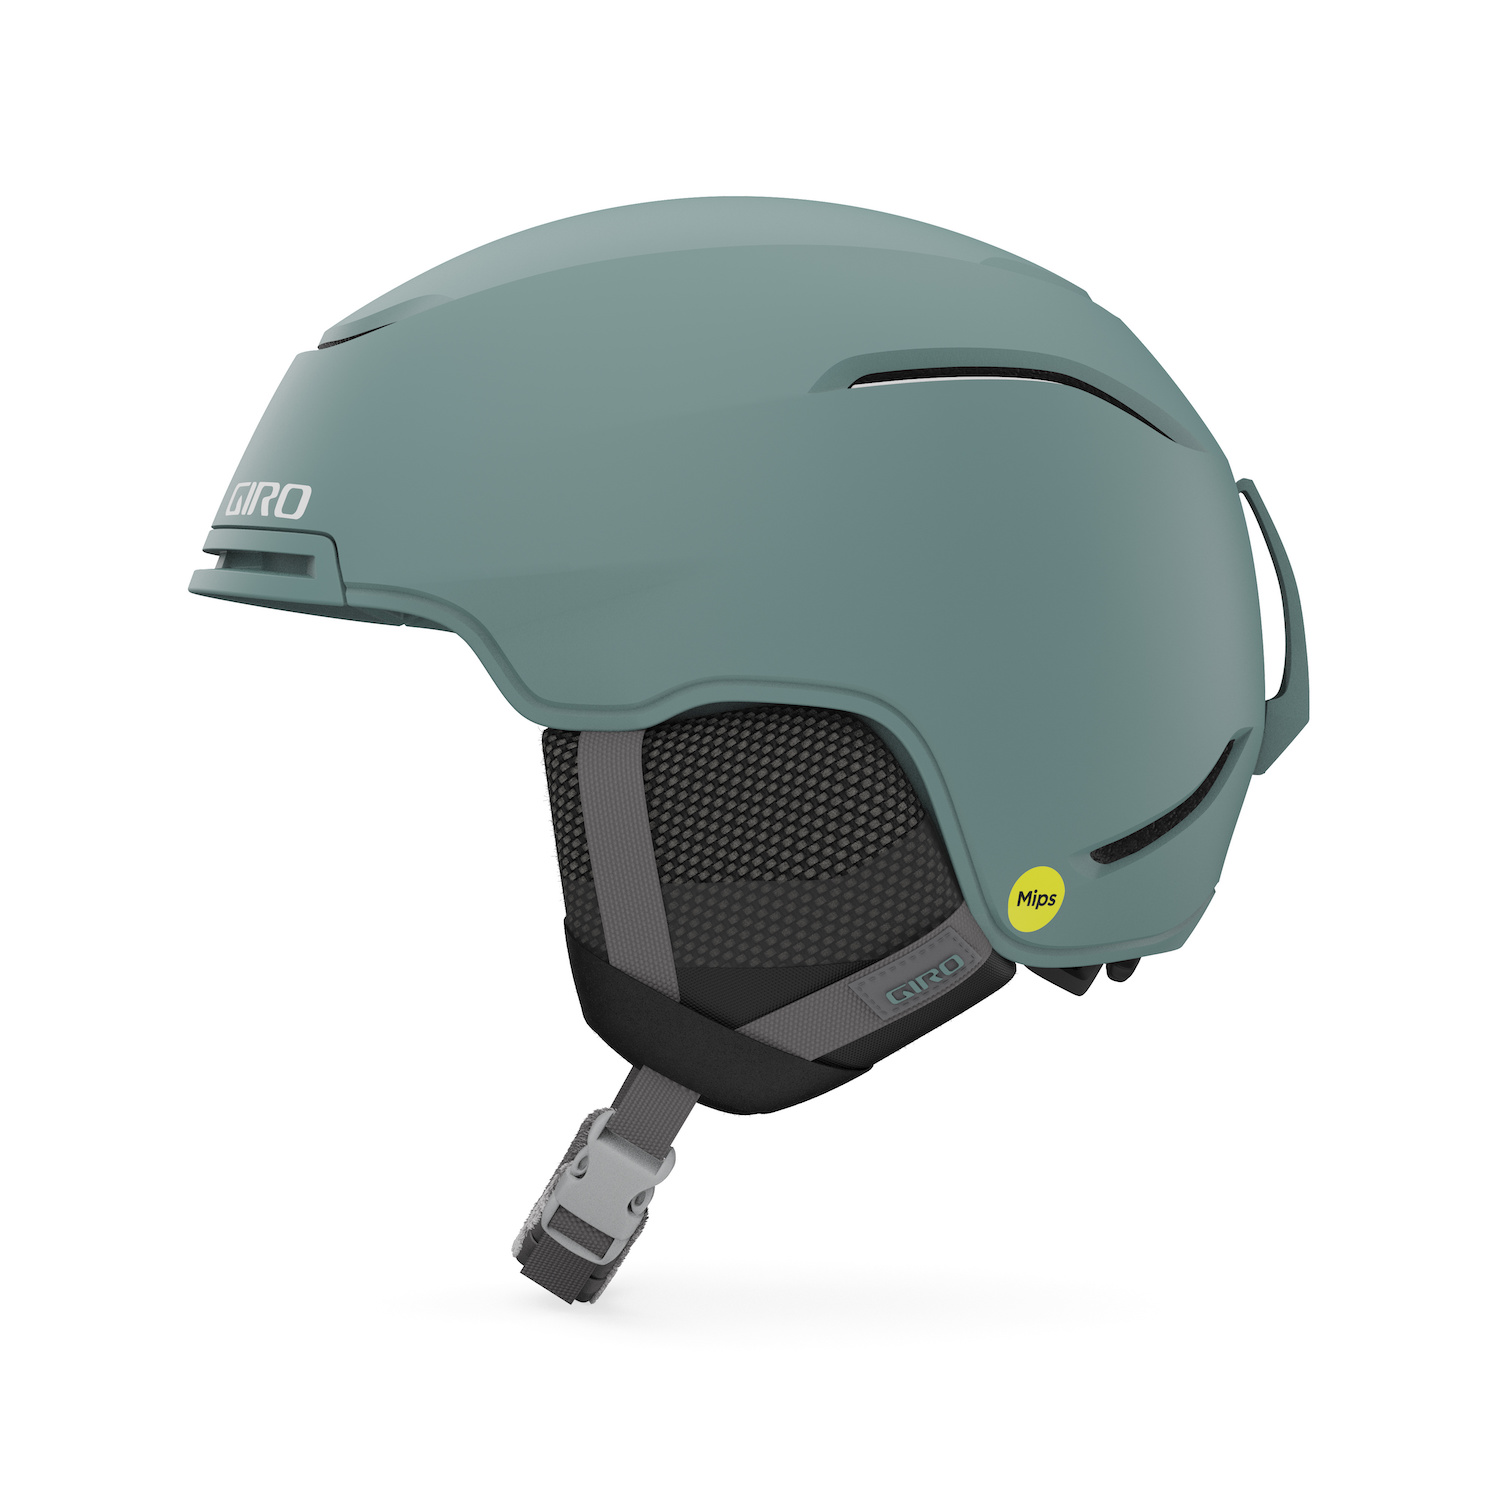 Teal Giro Terra MIPS helmet for women